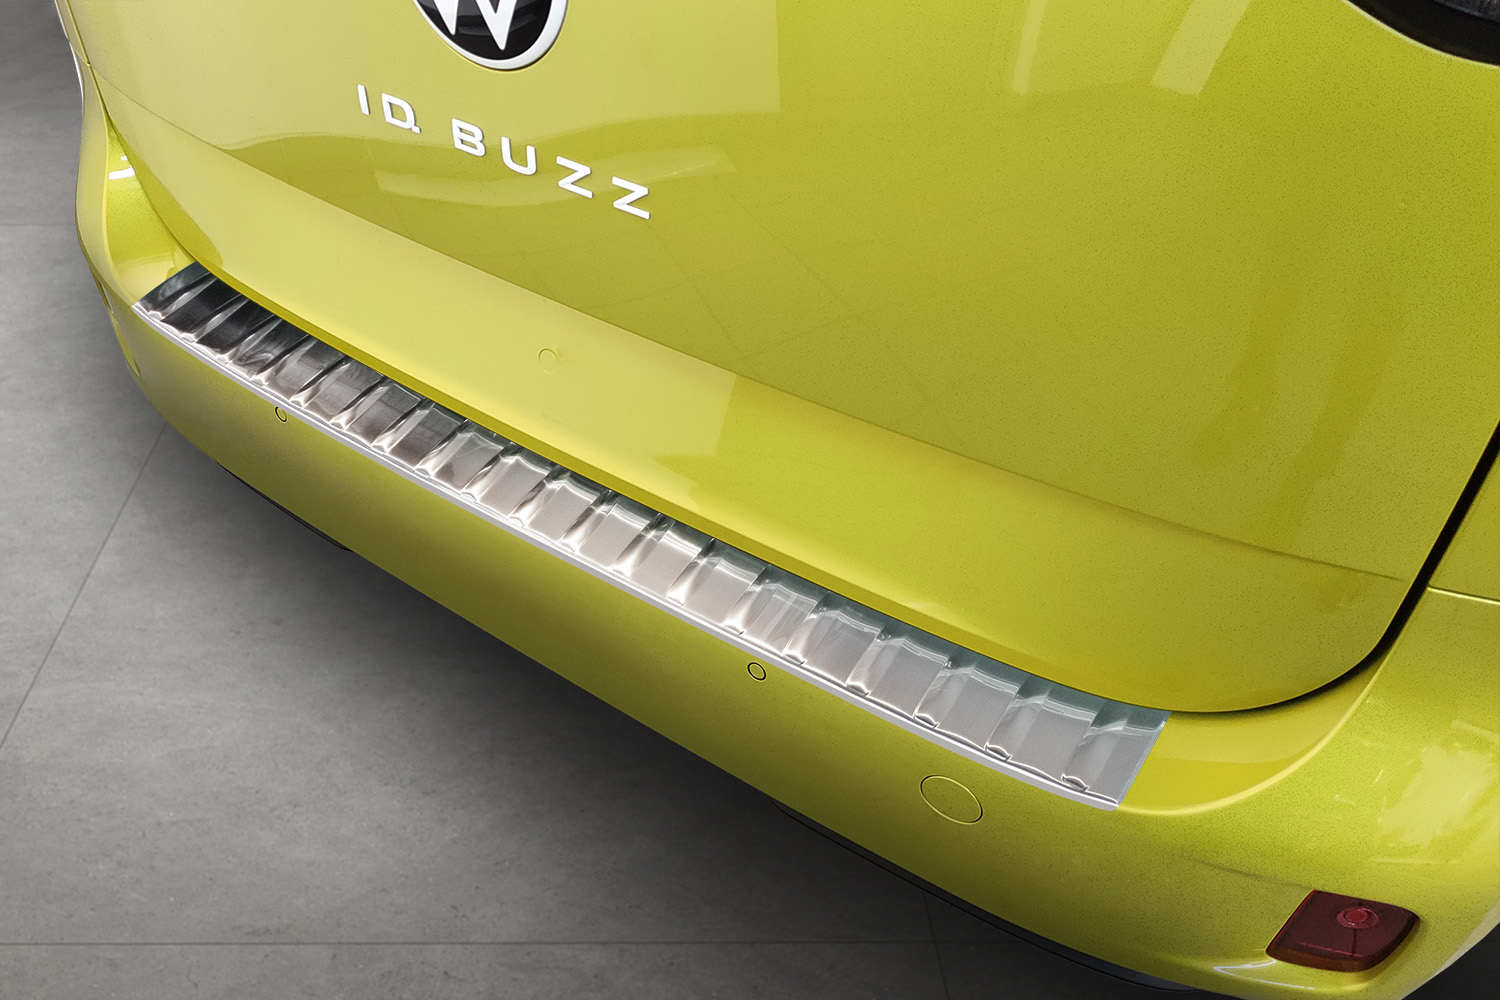 Universal Ladekantenschutz Gummi Kunststoff Profil Stoßstangen Auto Lack  Schutz